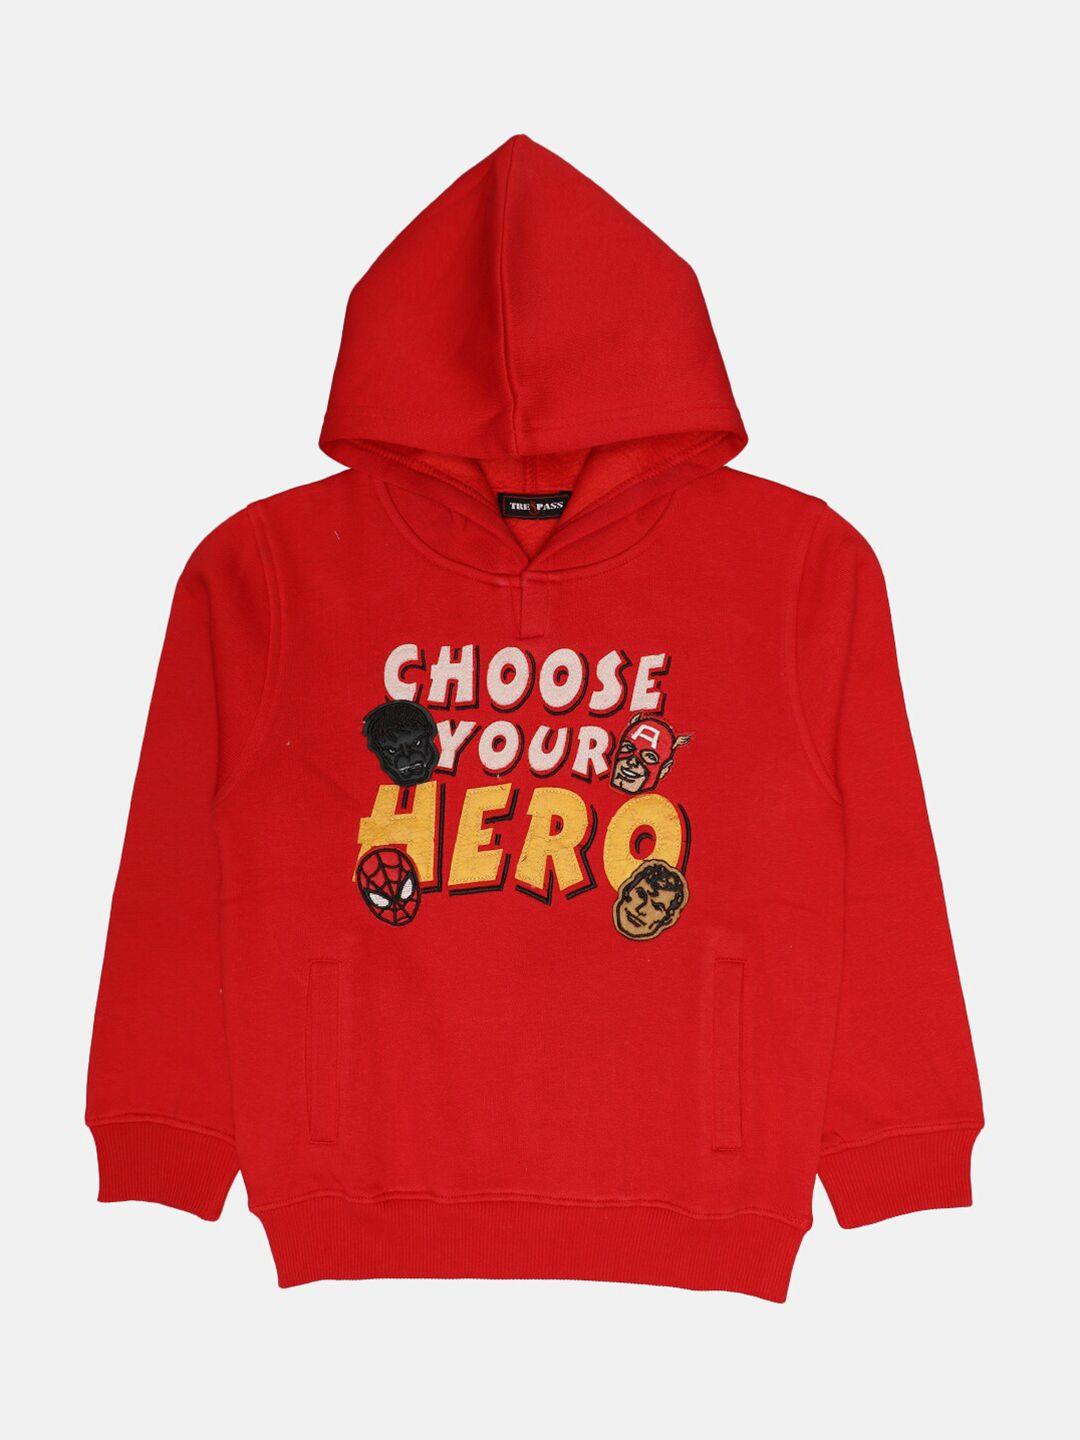 tre&pass boys red printed hooded sweatshirt